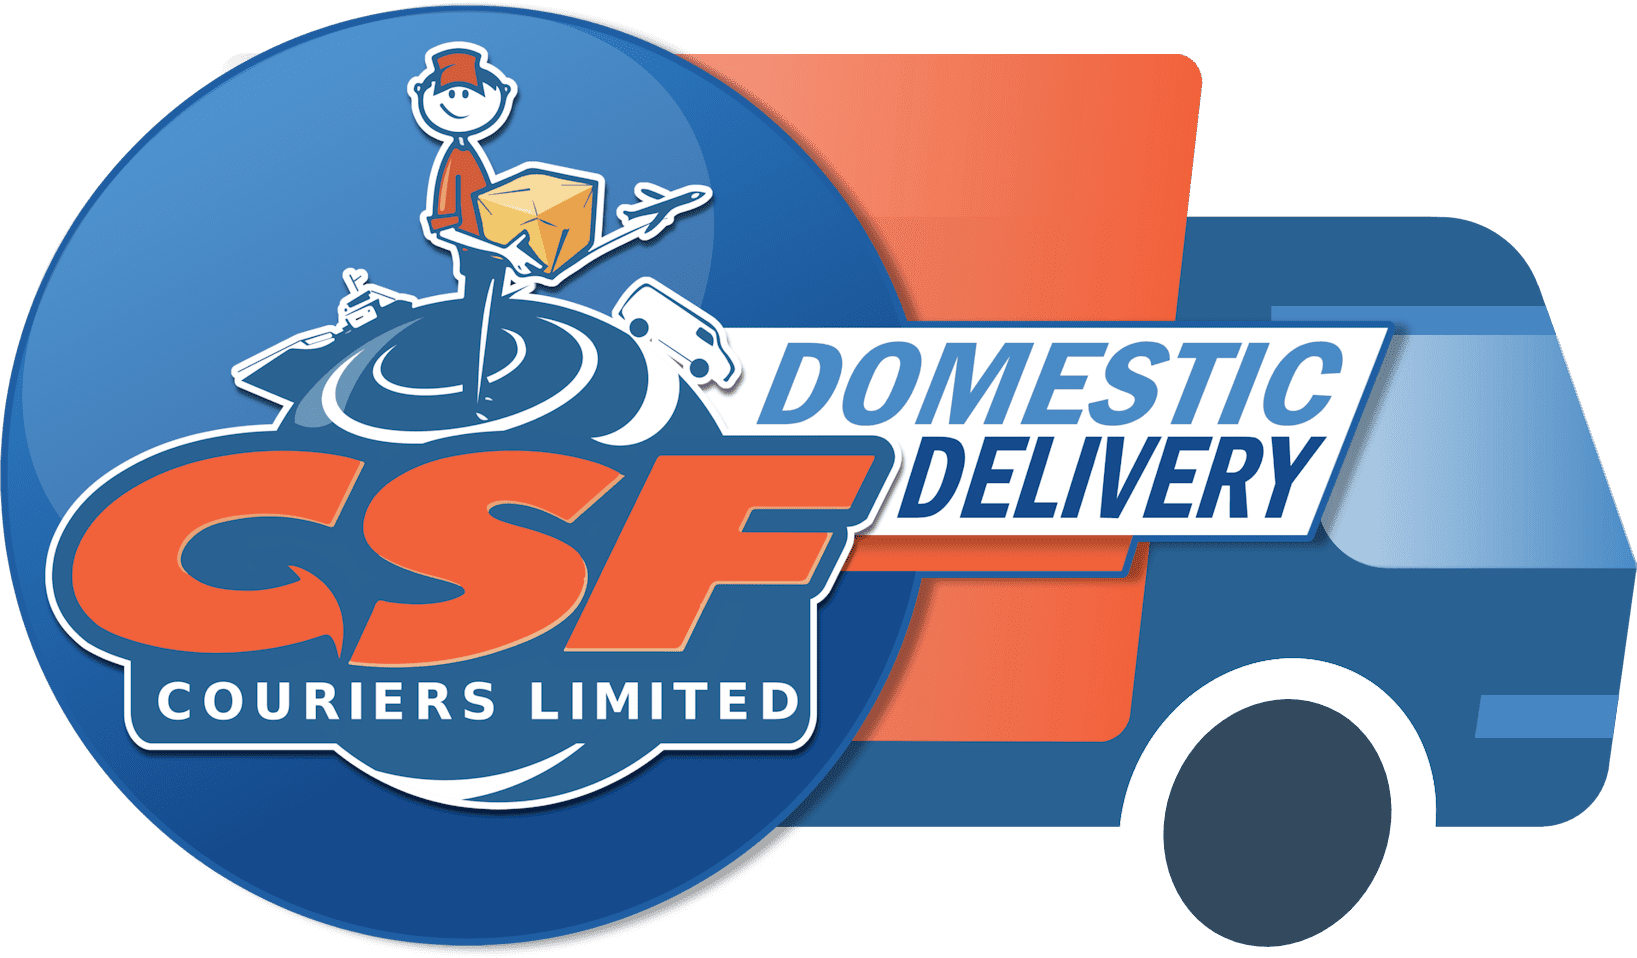 logo-csf-couriers-ltd-domestic